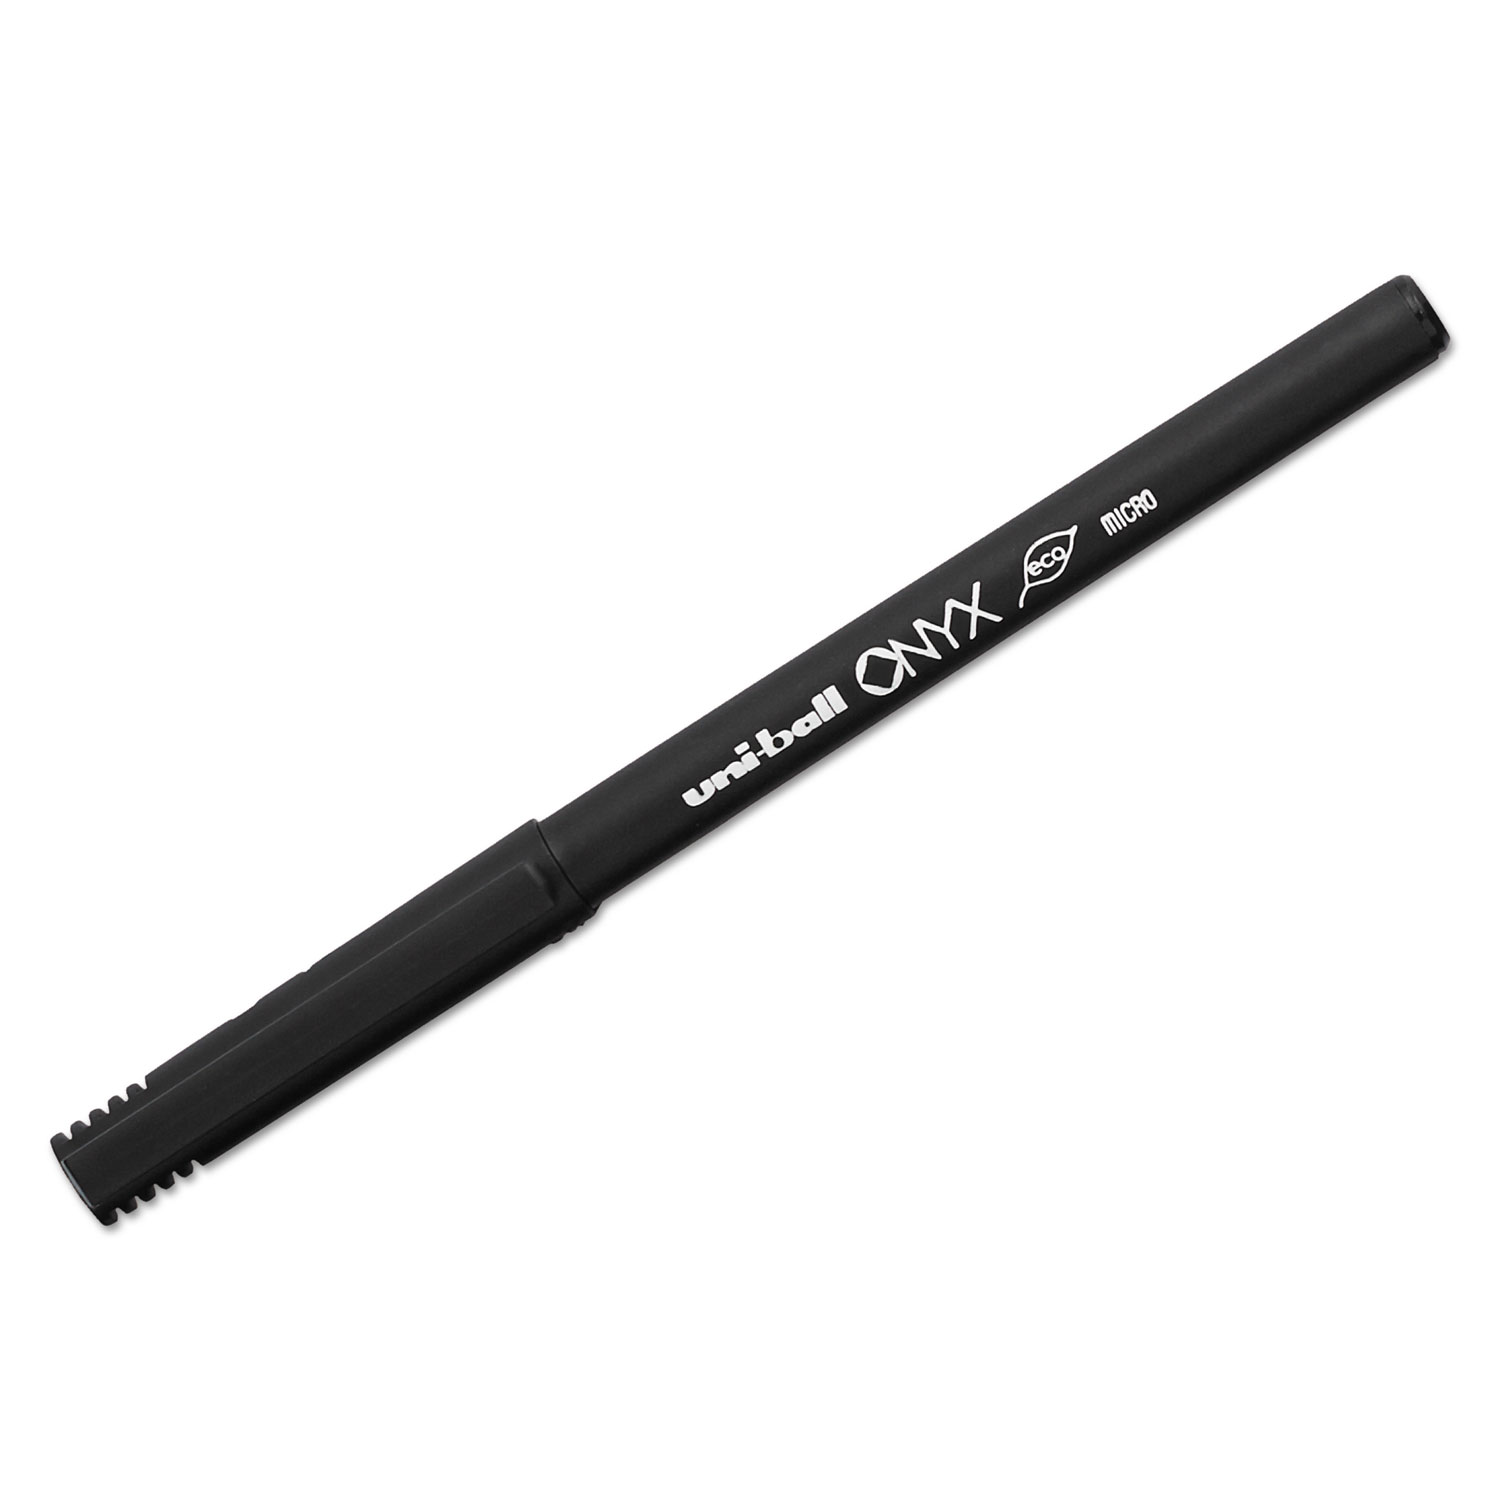 Onyx Roller Ball Stick Dye-Based Pen, Blue Ink, Micro, Dozen